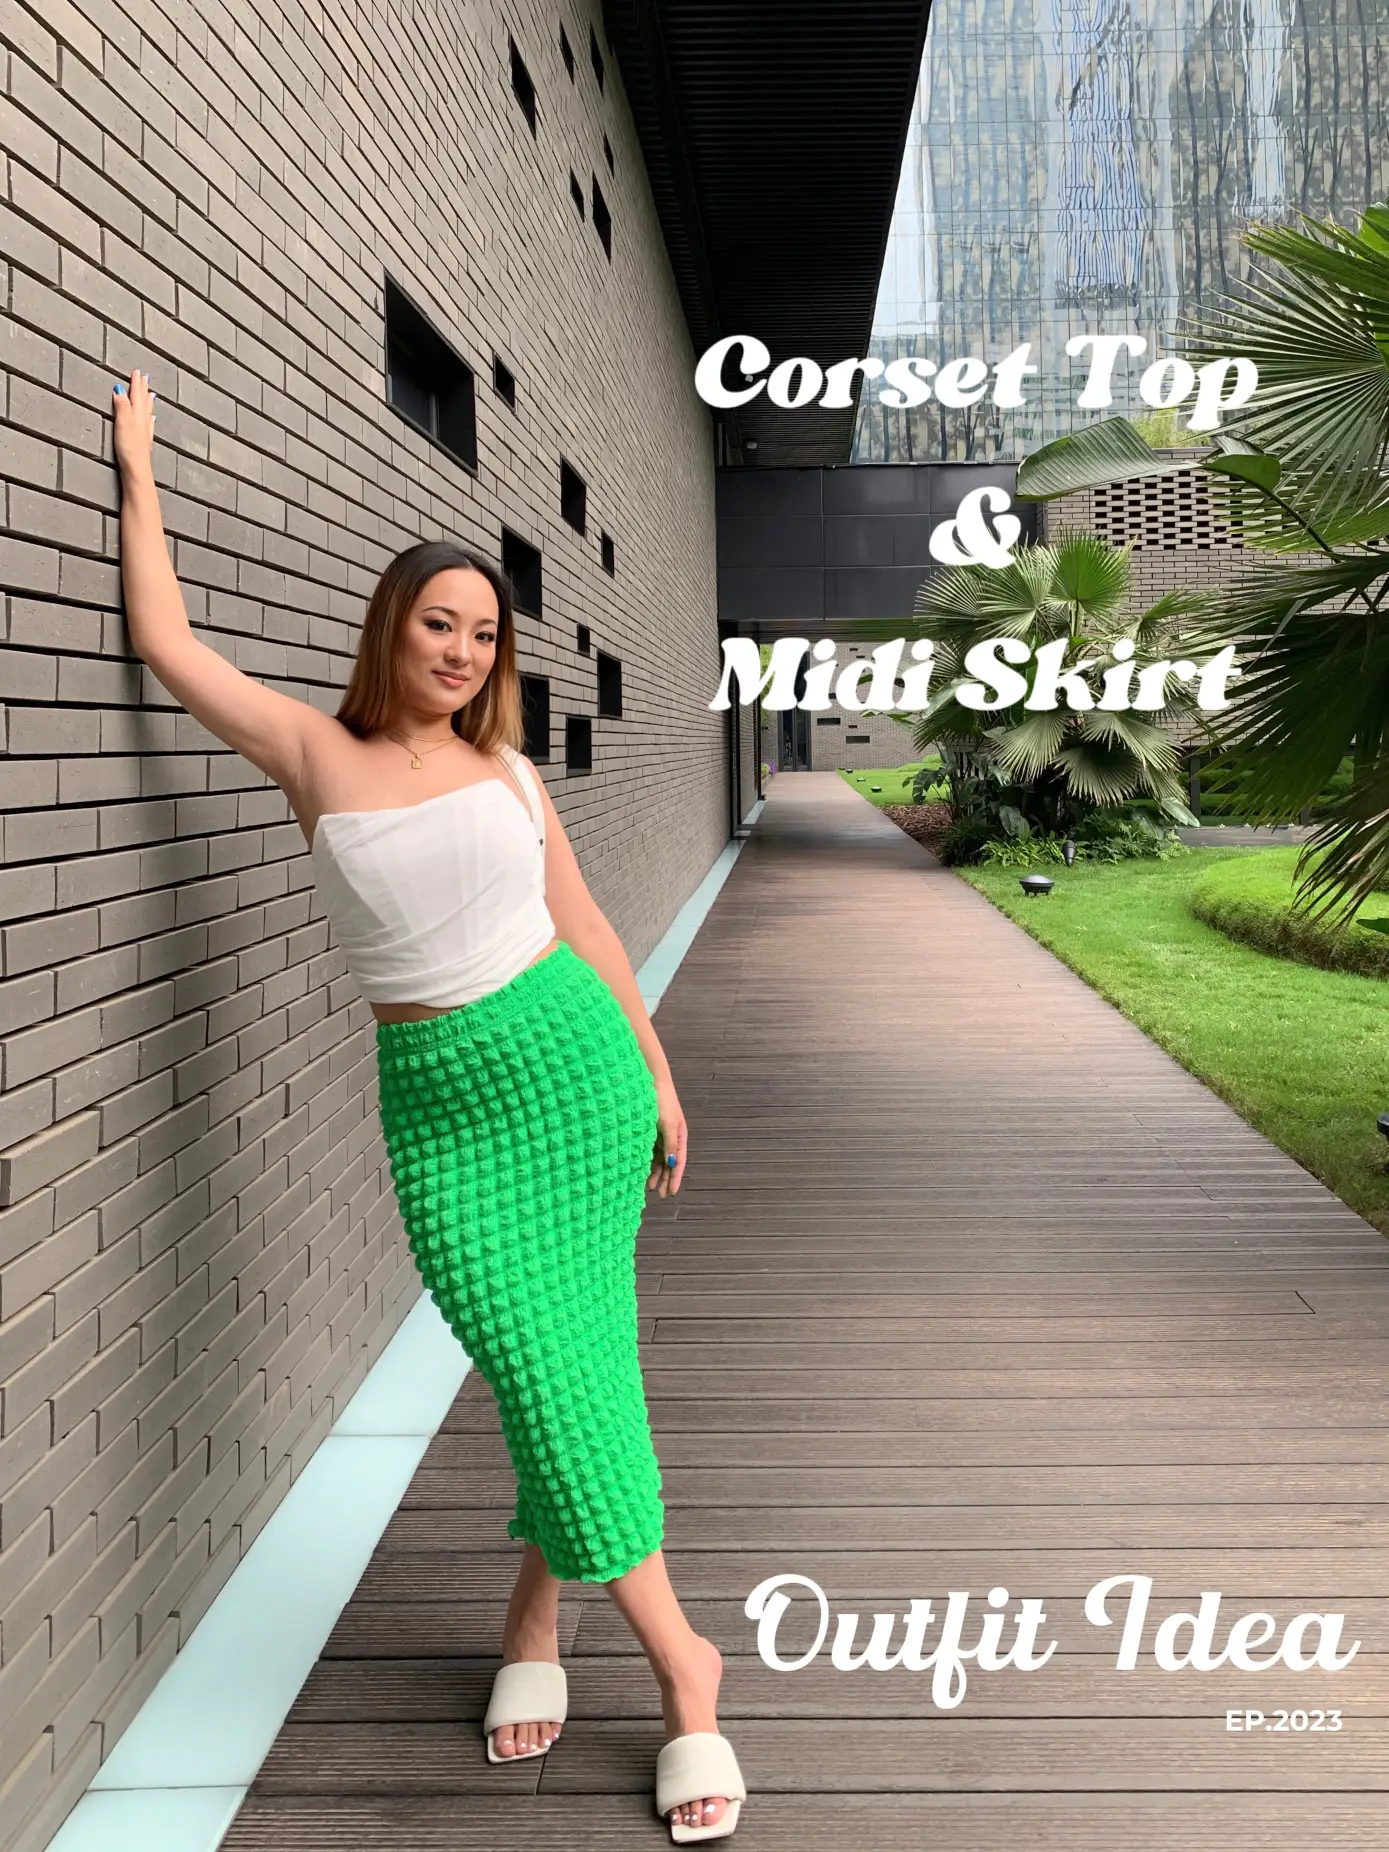 Corset Top & Midi Skirt for the summer